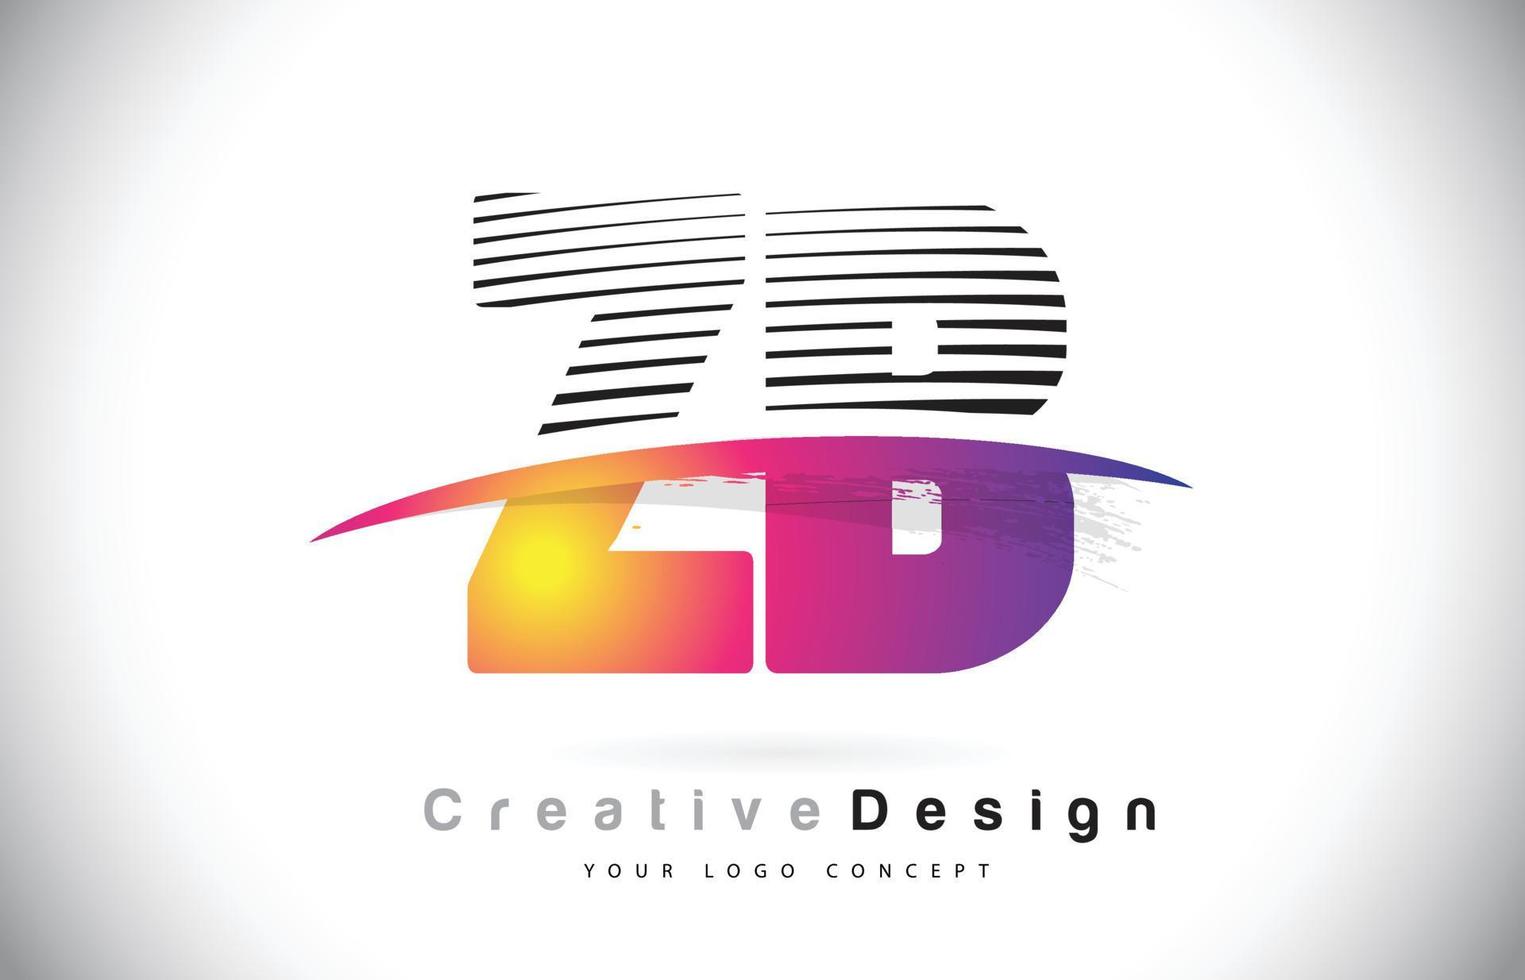 zb zb brief logo design mit kreativen linien und swosh in lila pinselfarbe. vektor